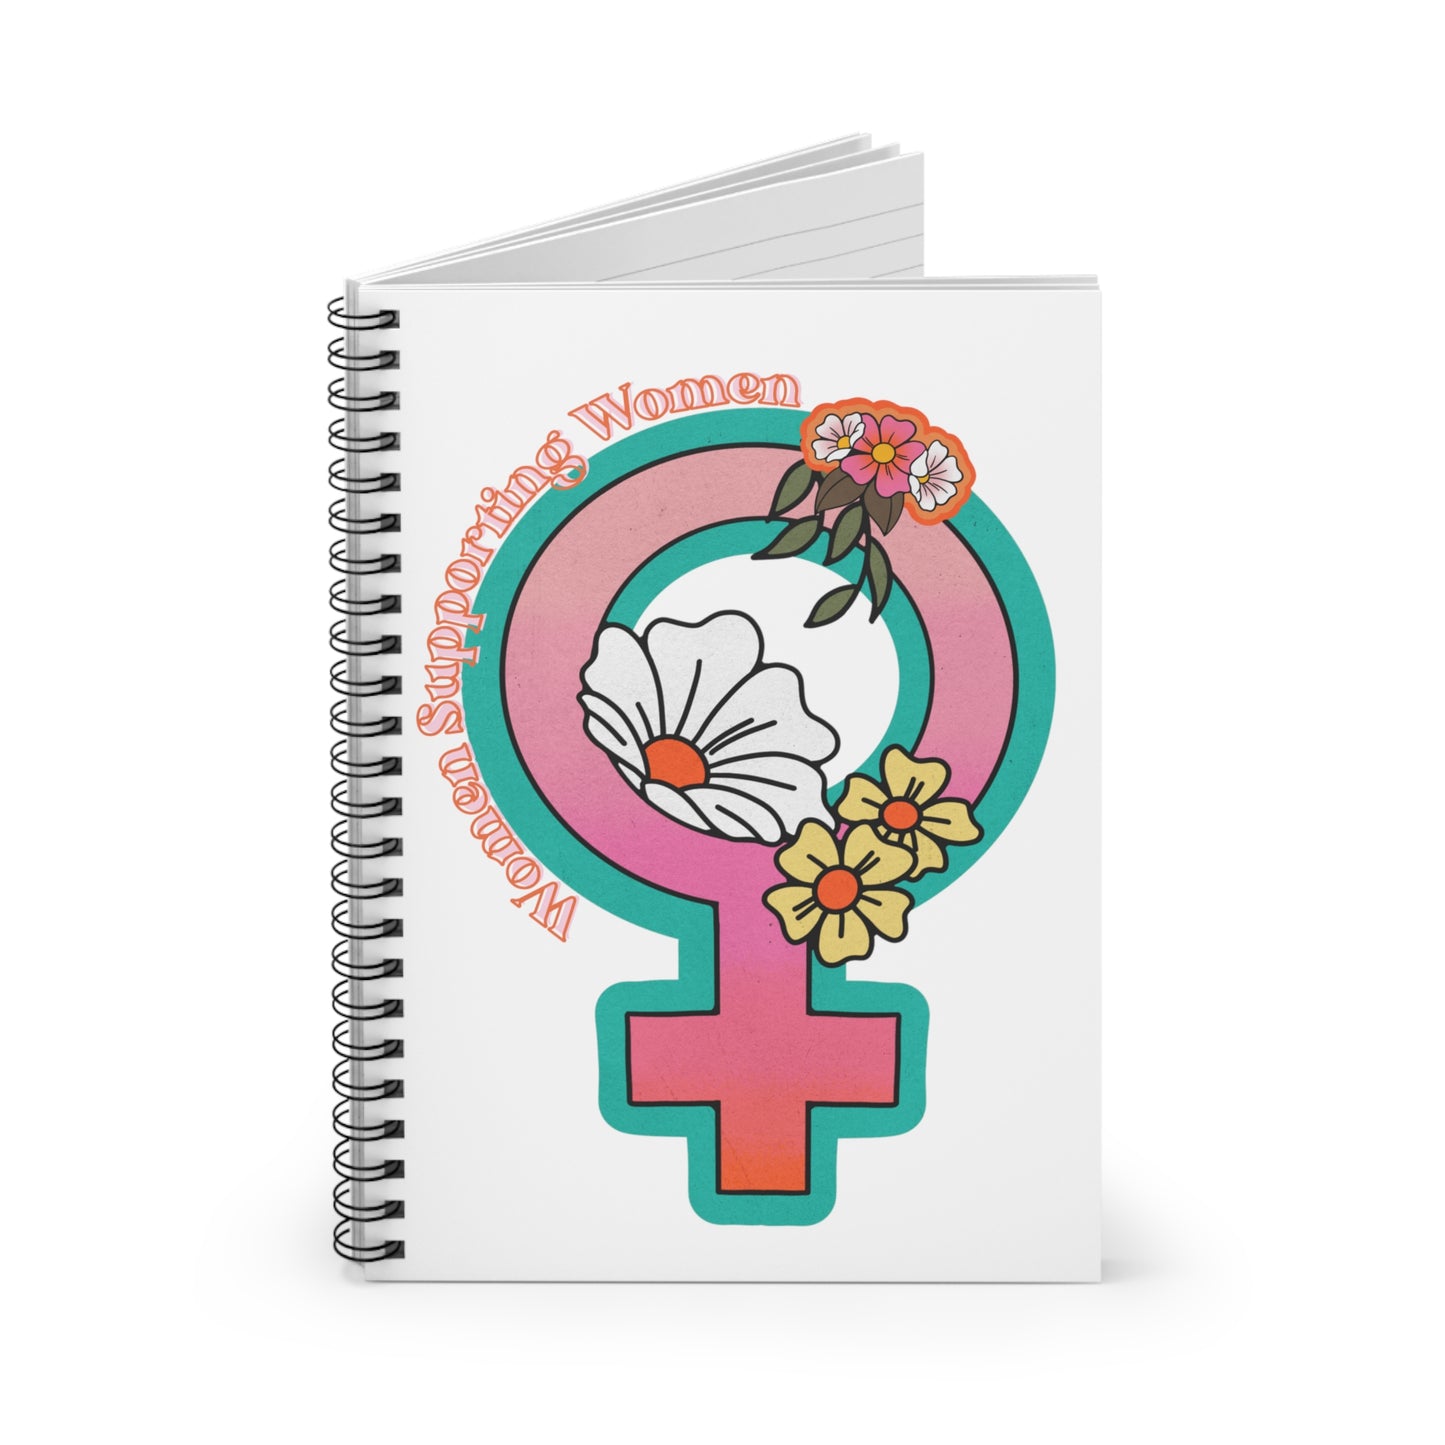 Women Supporting Women Spiral Notebook - Ruled Line